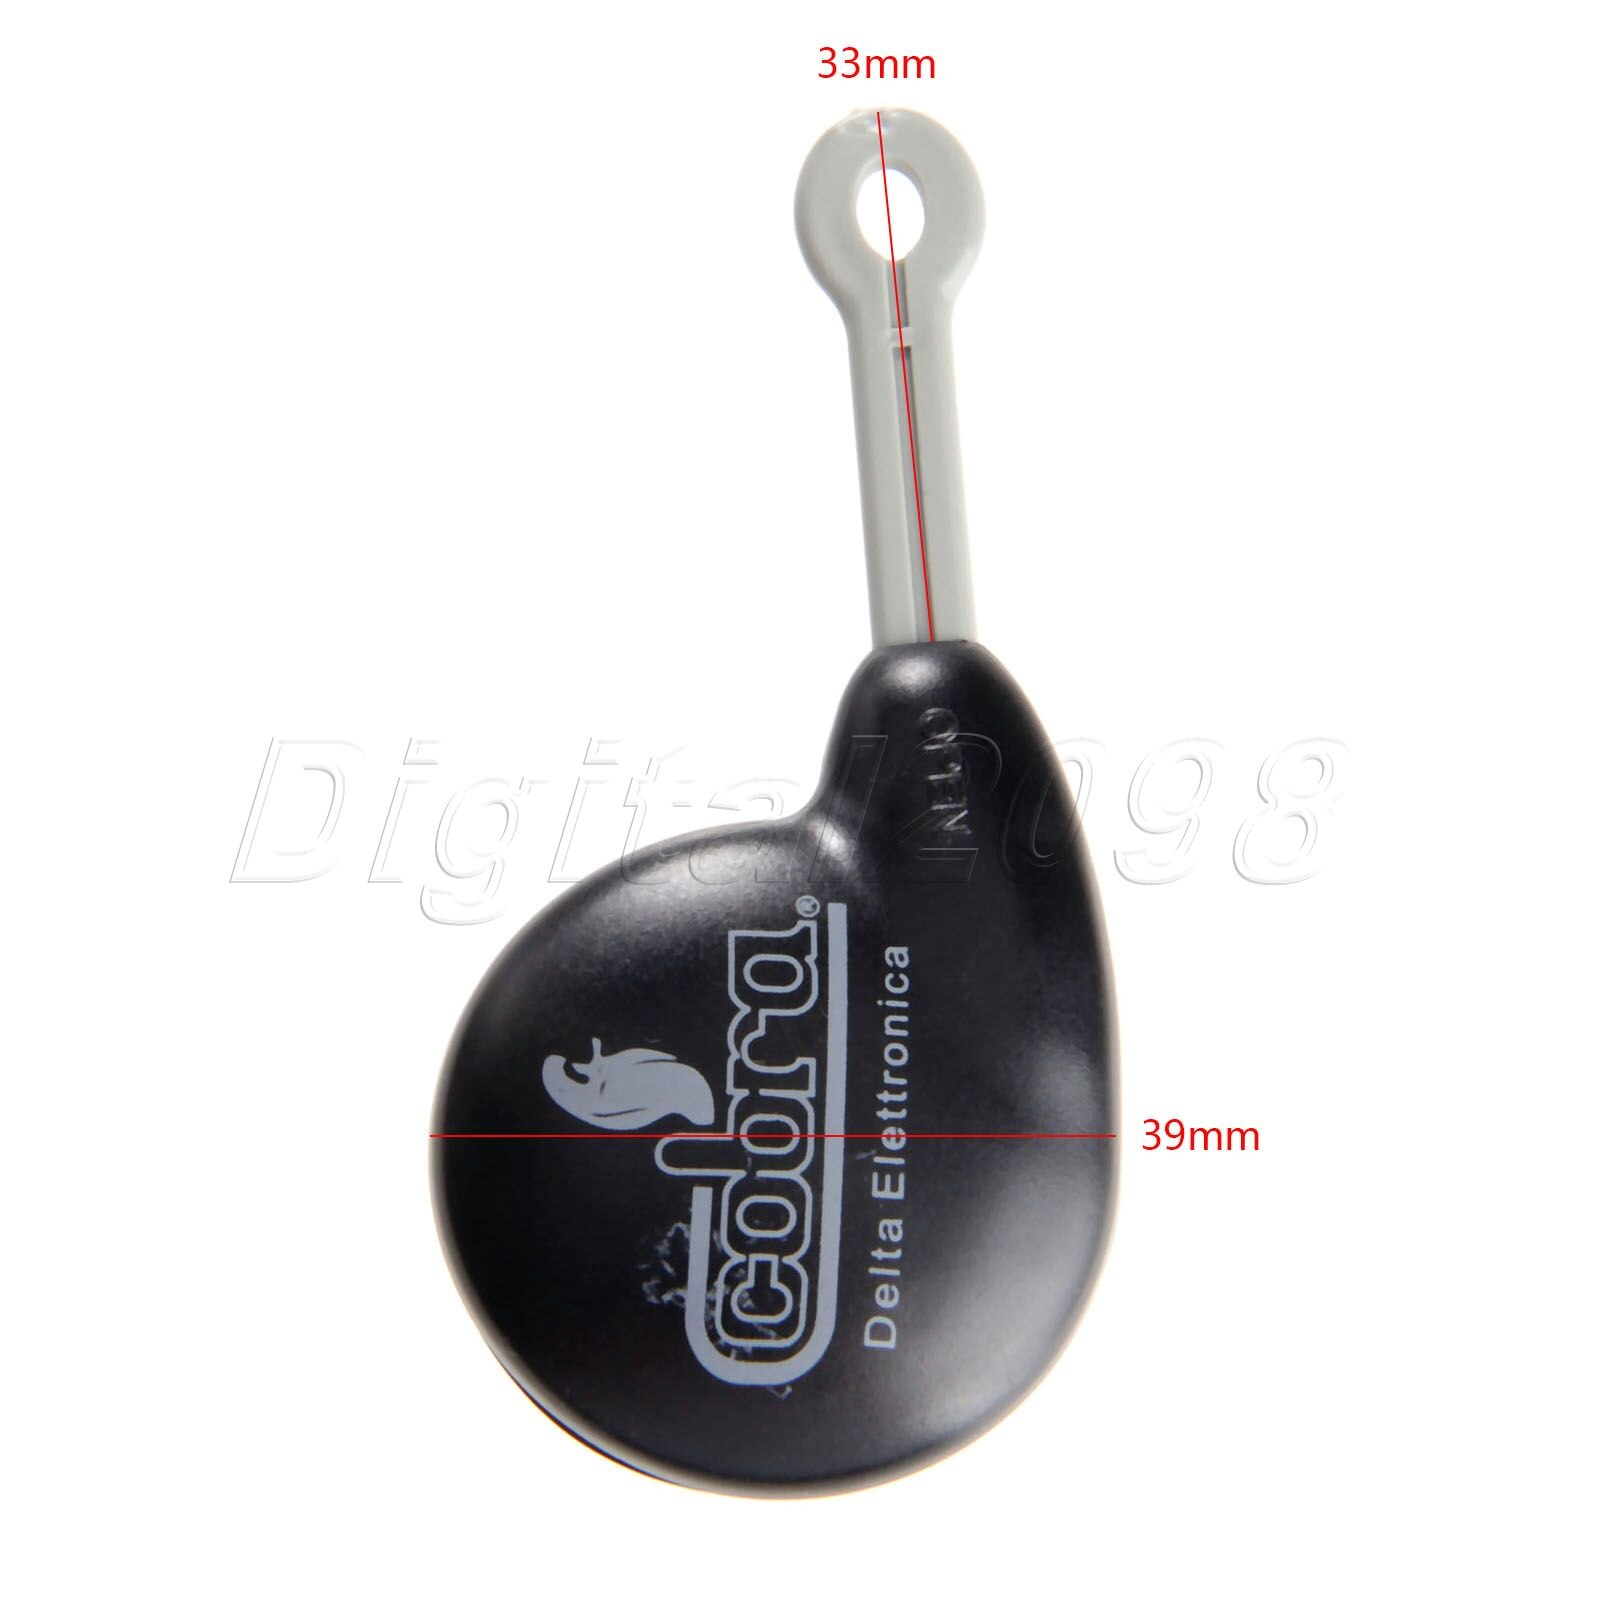 Yetaha 2 Knoppen Vervanging Remote Key Shell Voor Cobra Alarm 7777 Black Keyless Entry Auto Sleutelhanger Gevallen